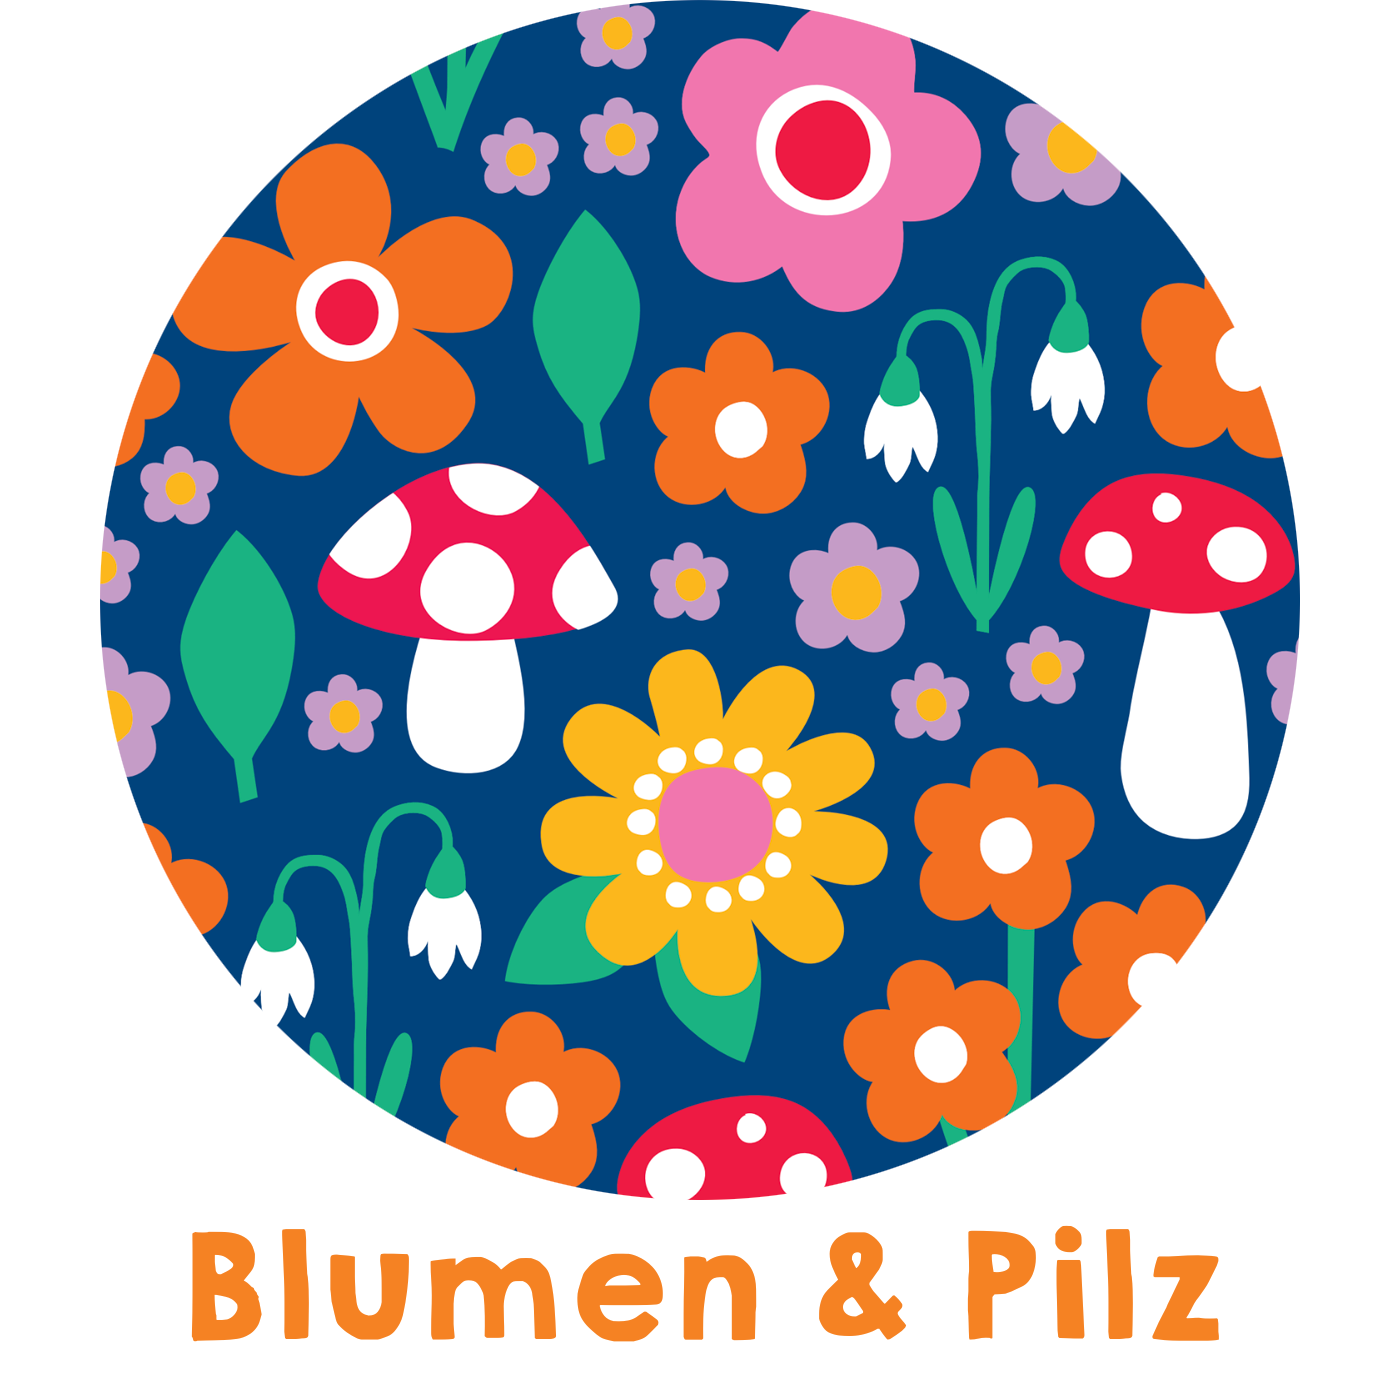 Blumen & Pilz